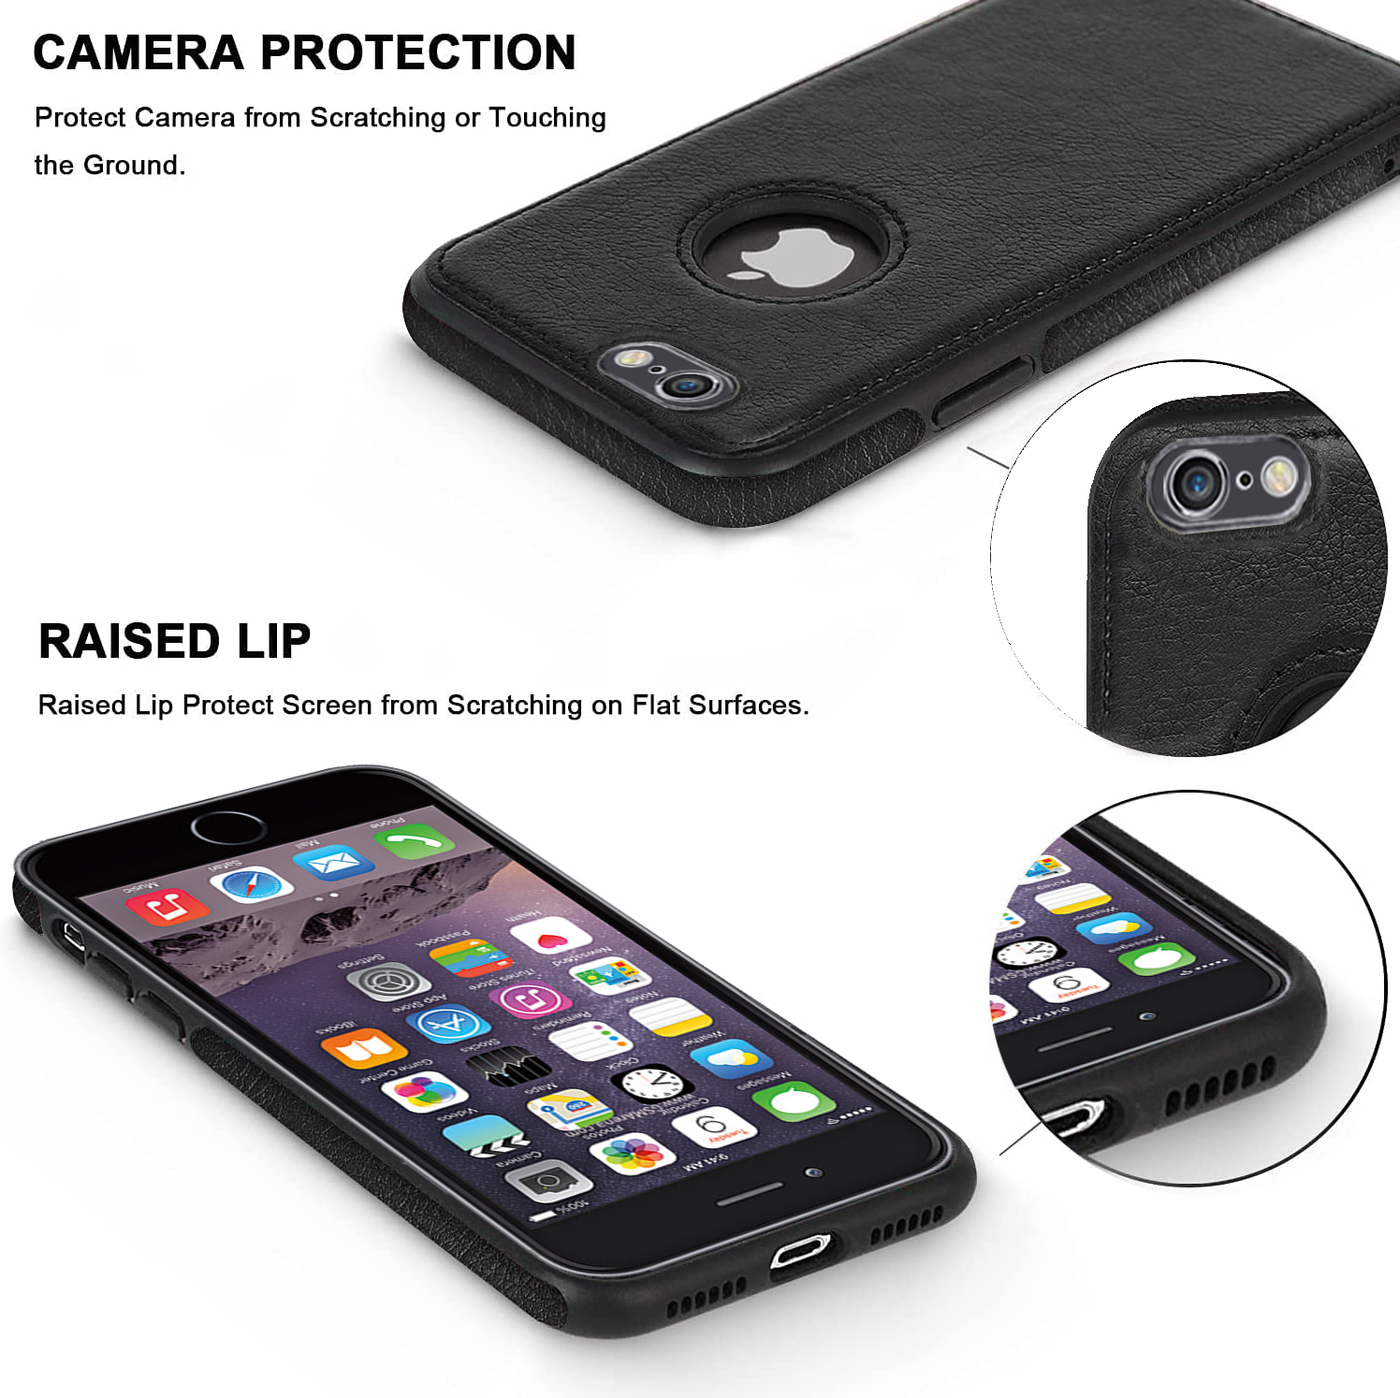 Excelsior Premium PU Leather Back Cover case For Apple iPhone 6 Plus | iPhone 6s Plus